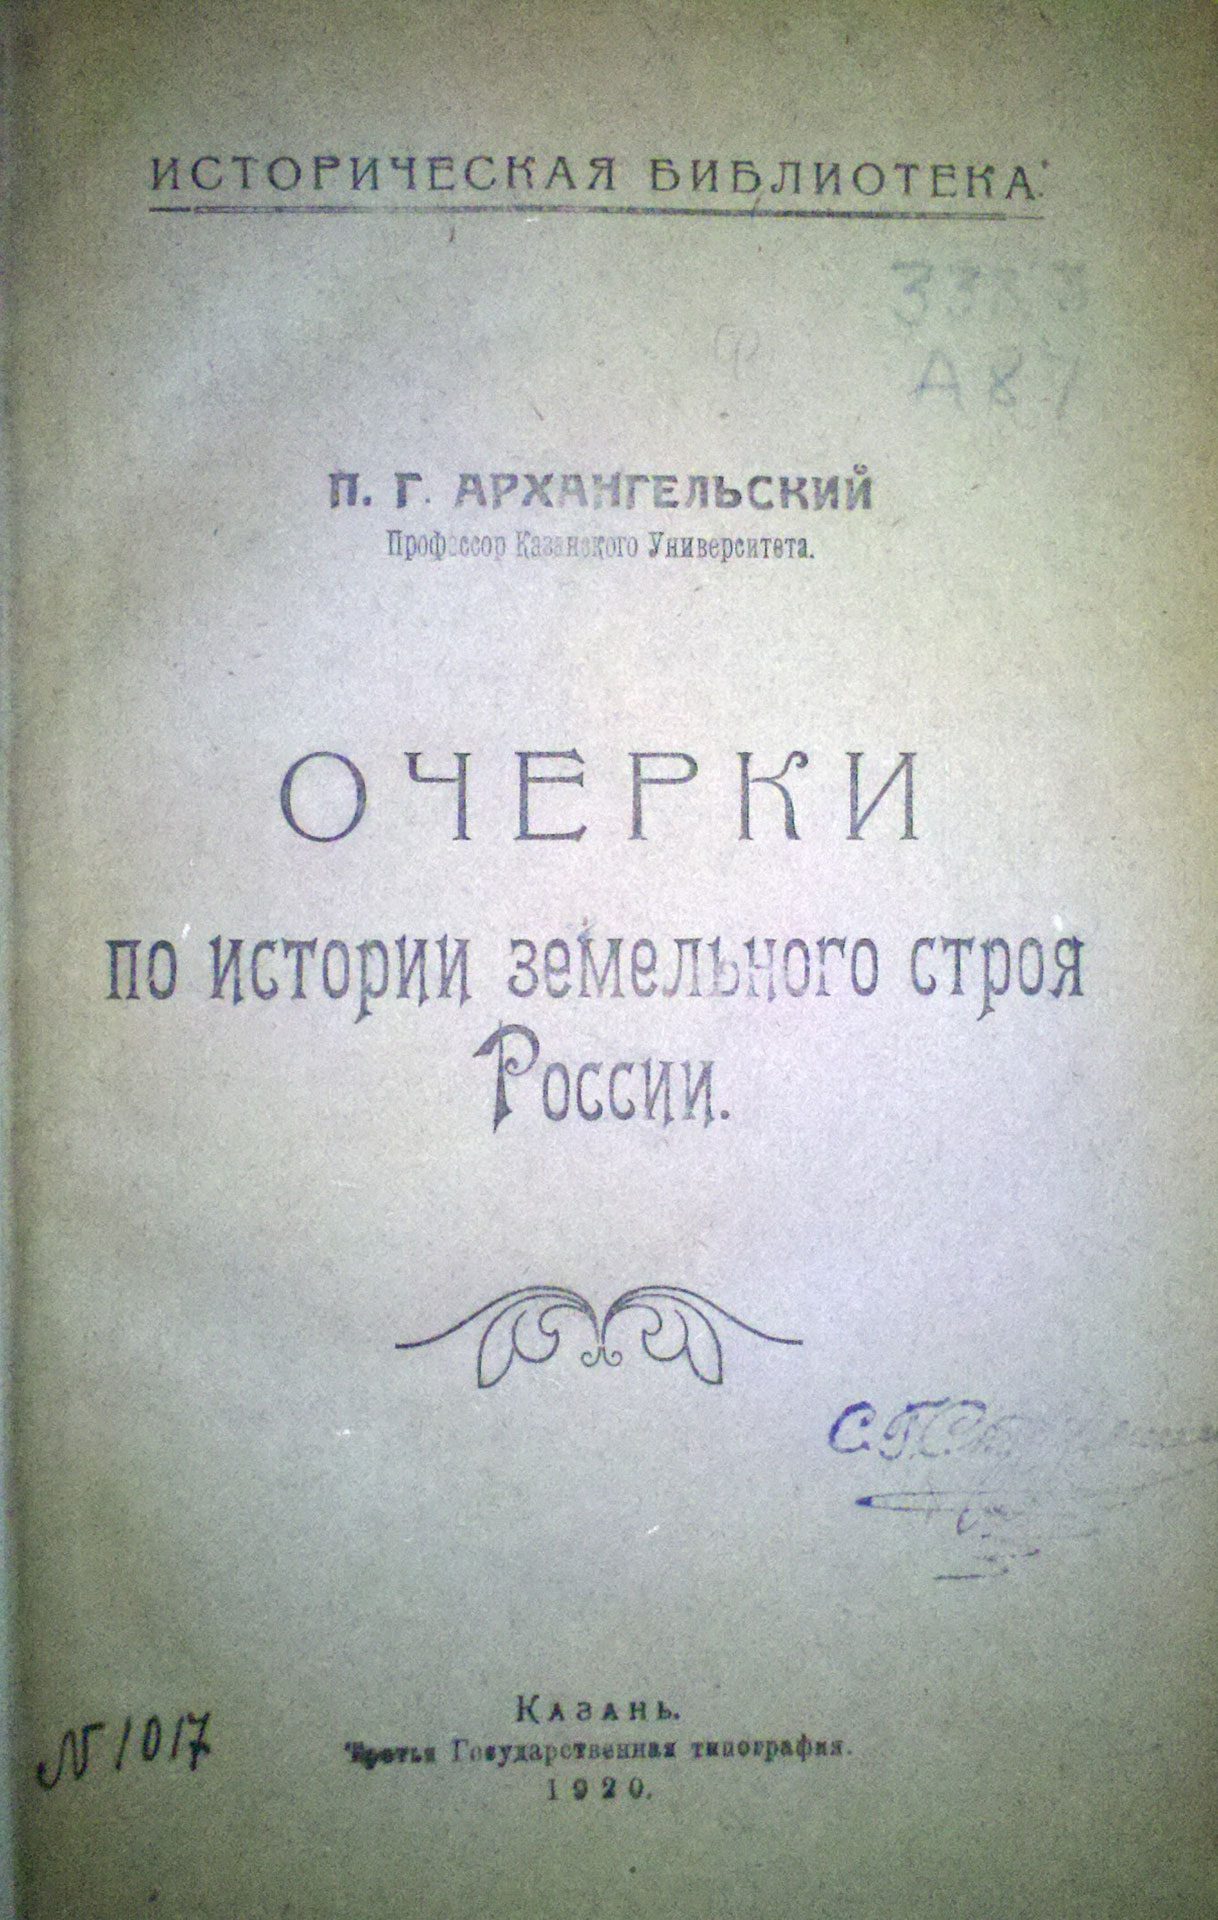 Karsavin L.P. Vvedenie v istoriju (Teoriya istorii). In Russian/ Karsavin a.P. Introduction in history (theory history). In Russian, n/a - landofmagazines.com